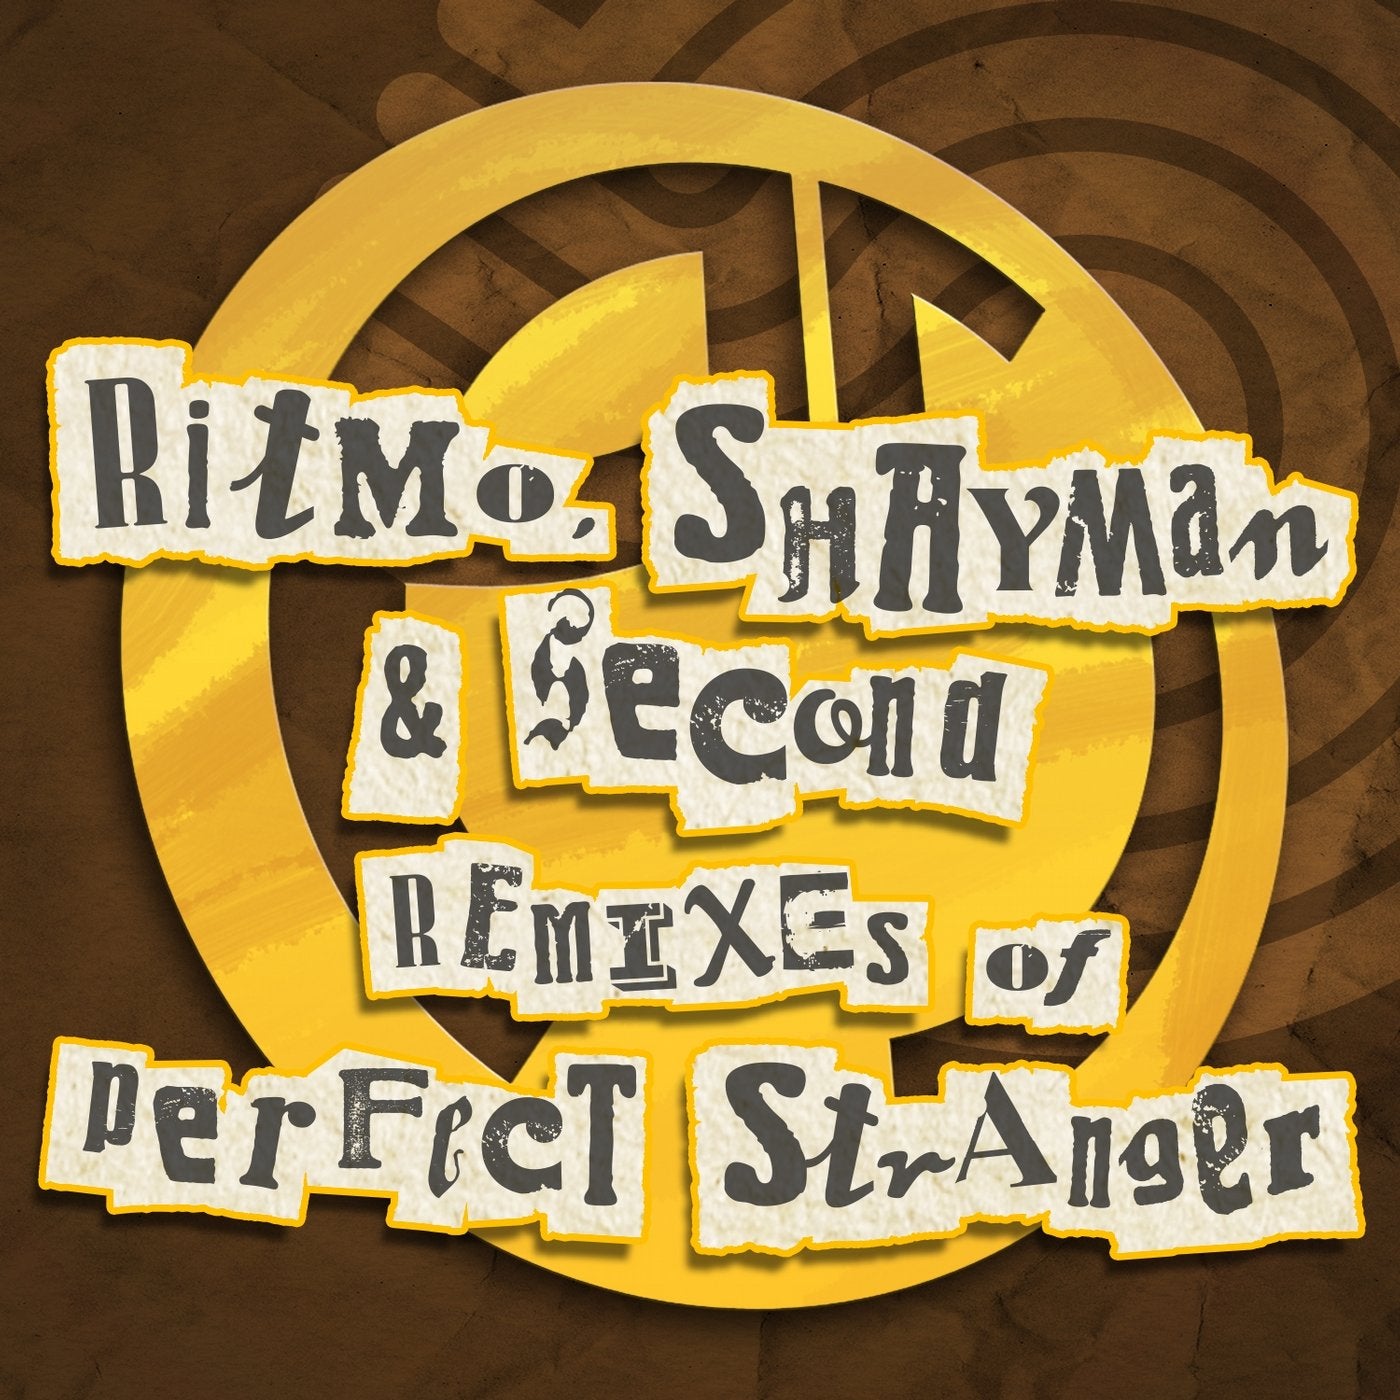 Perfect Stranger (Remixes)